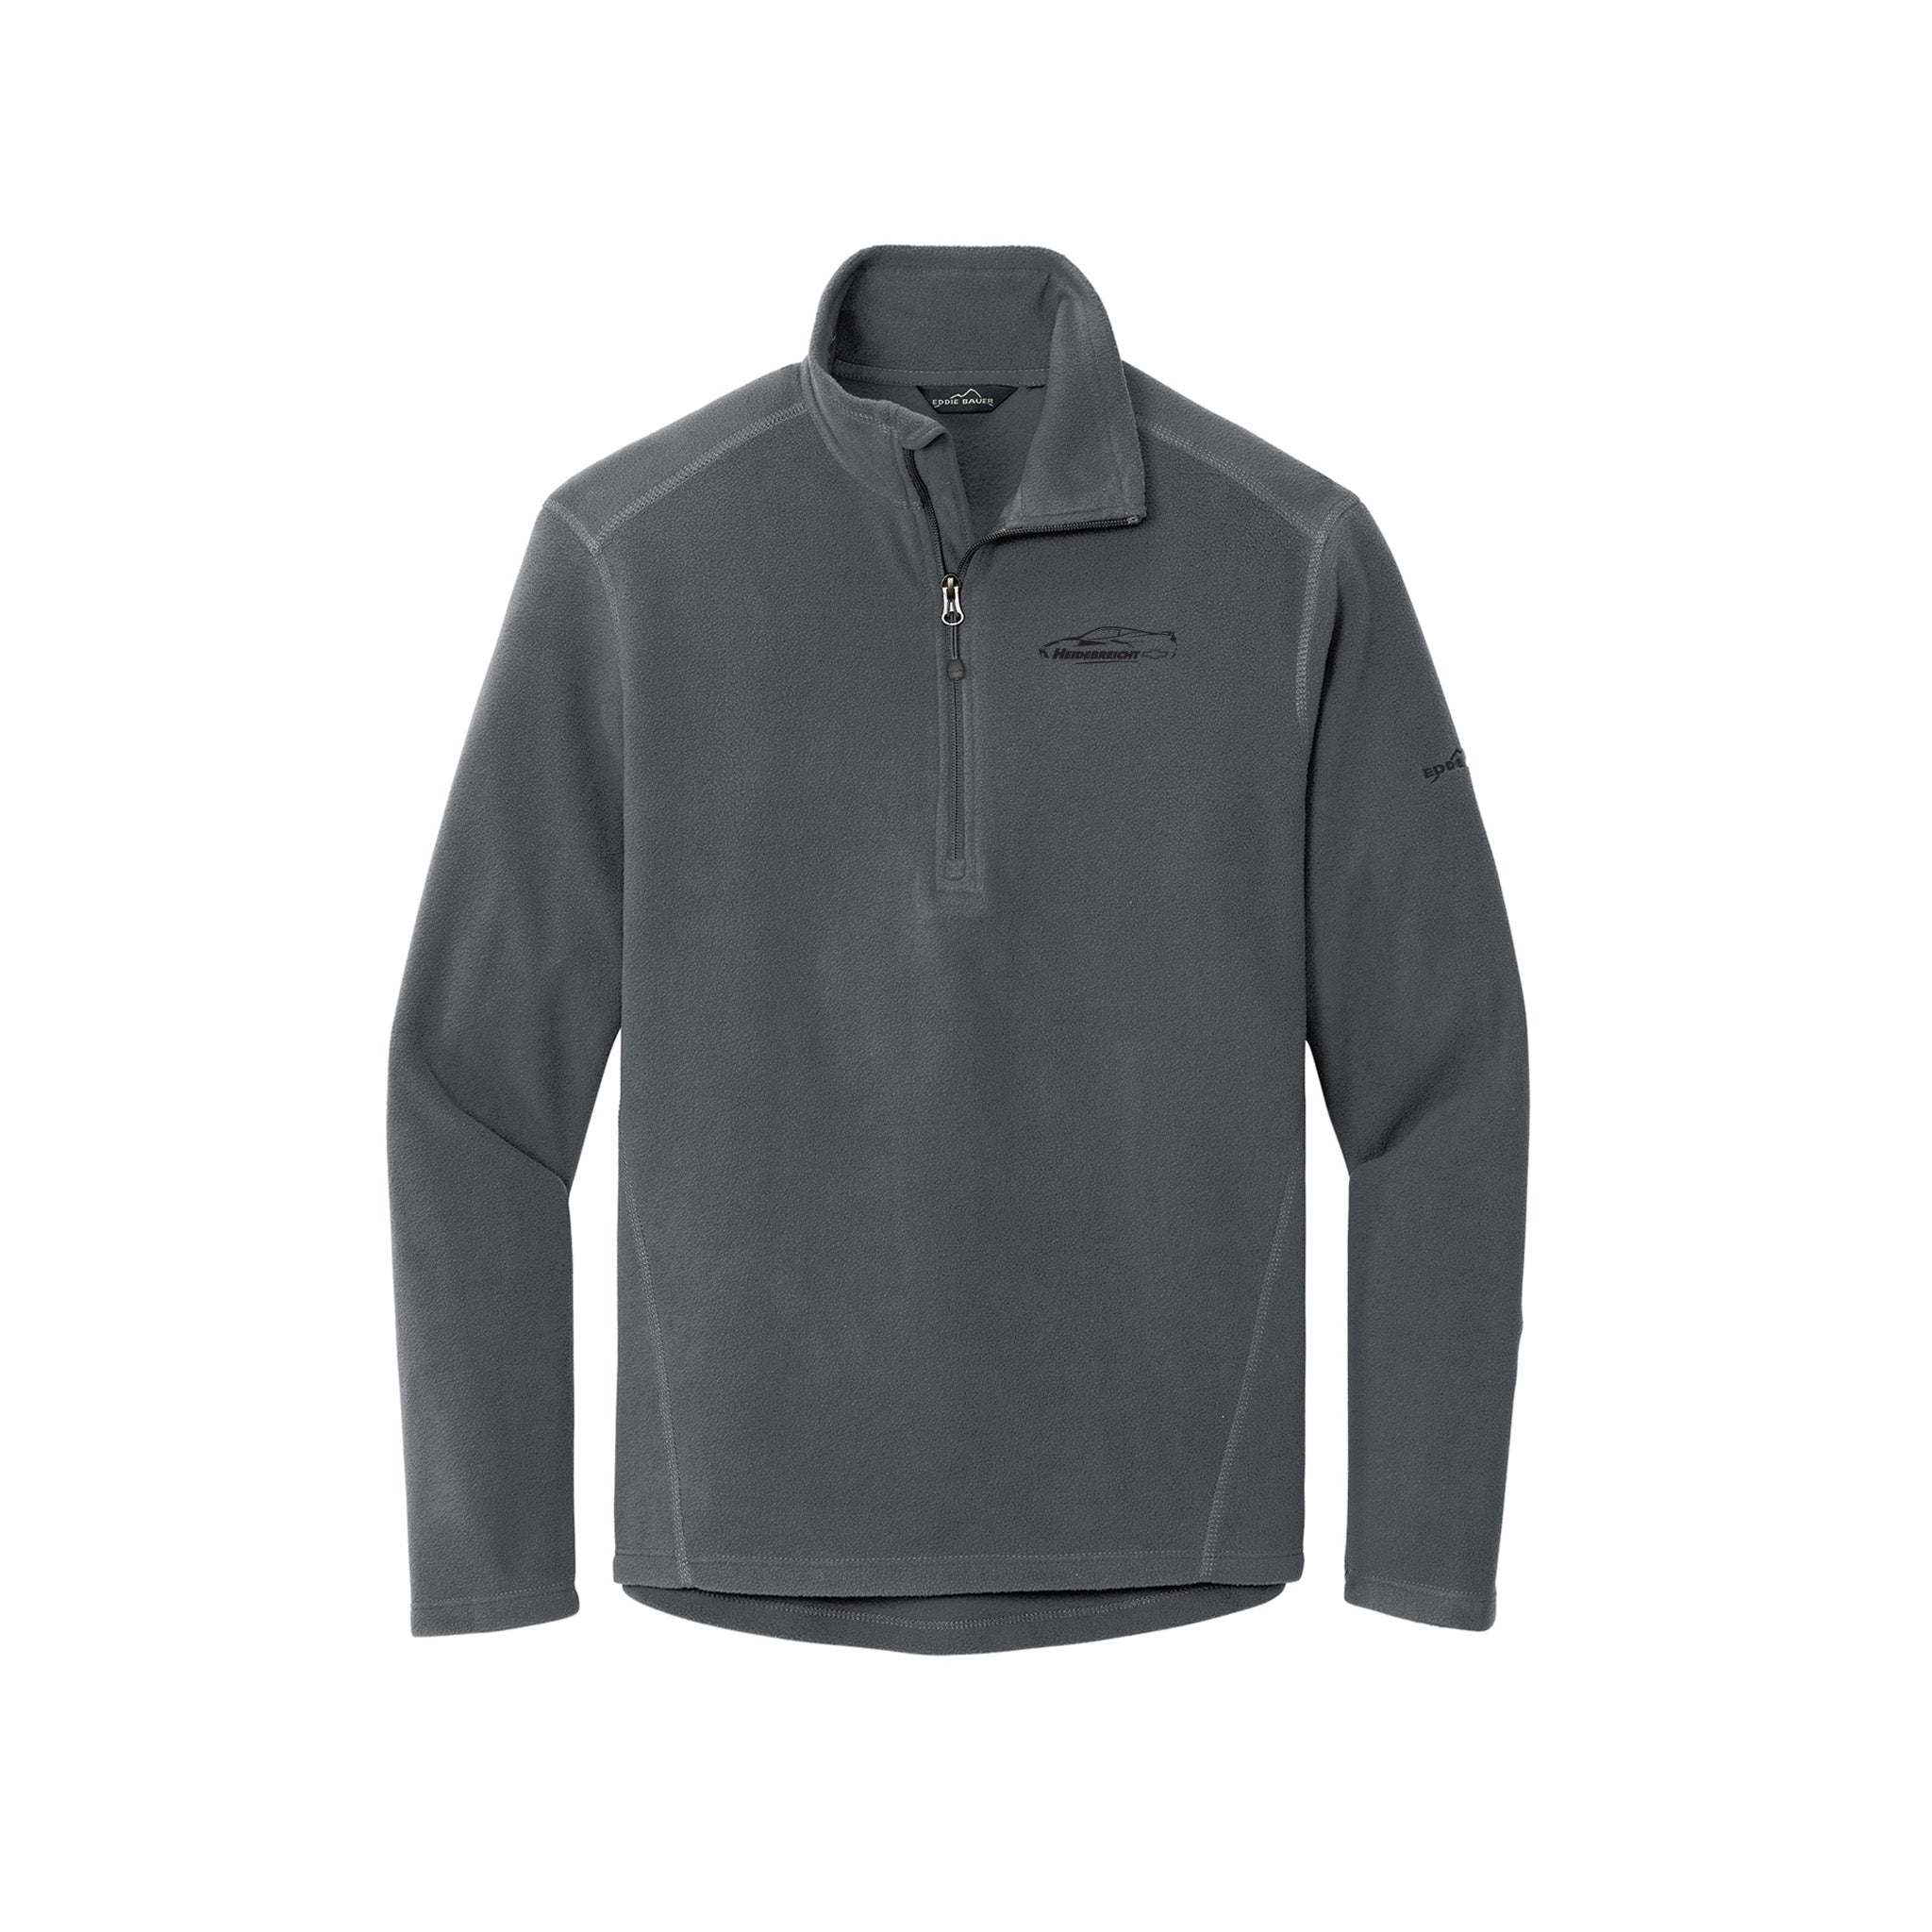 Pivotal - Eddie Bauer® - Fleece-Lined Jacket – Spirit Services Company